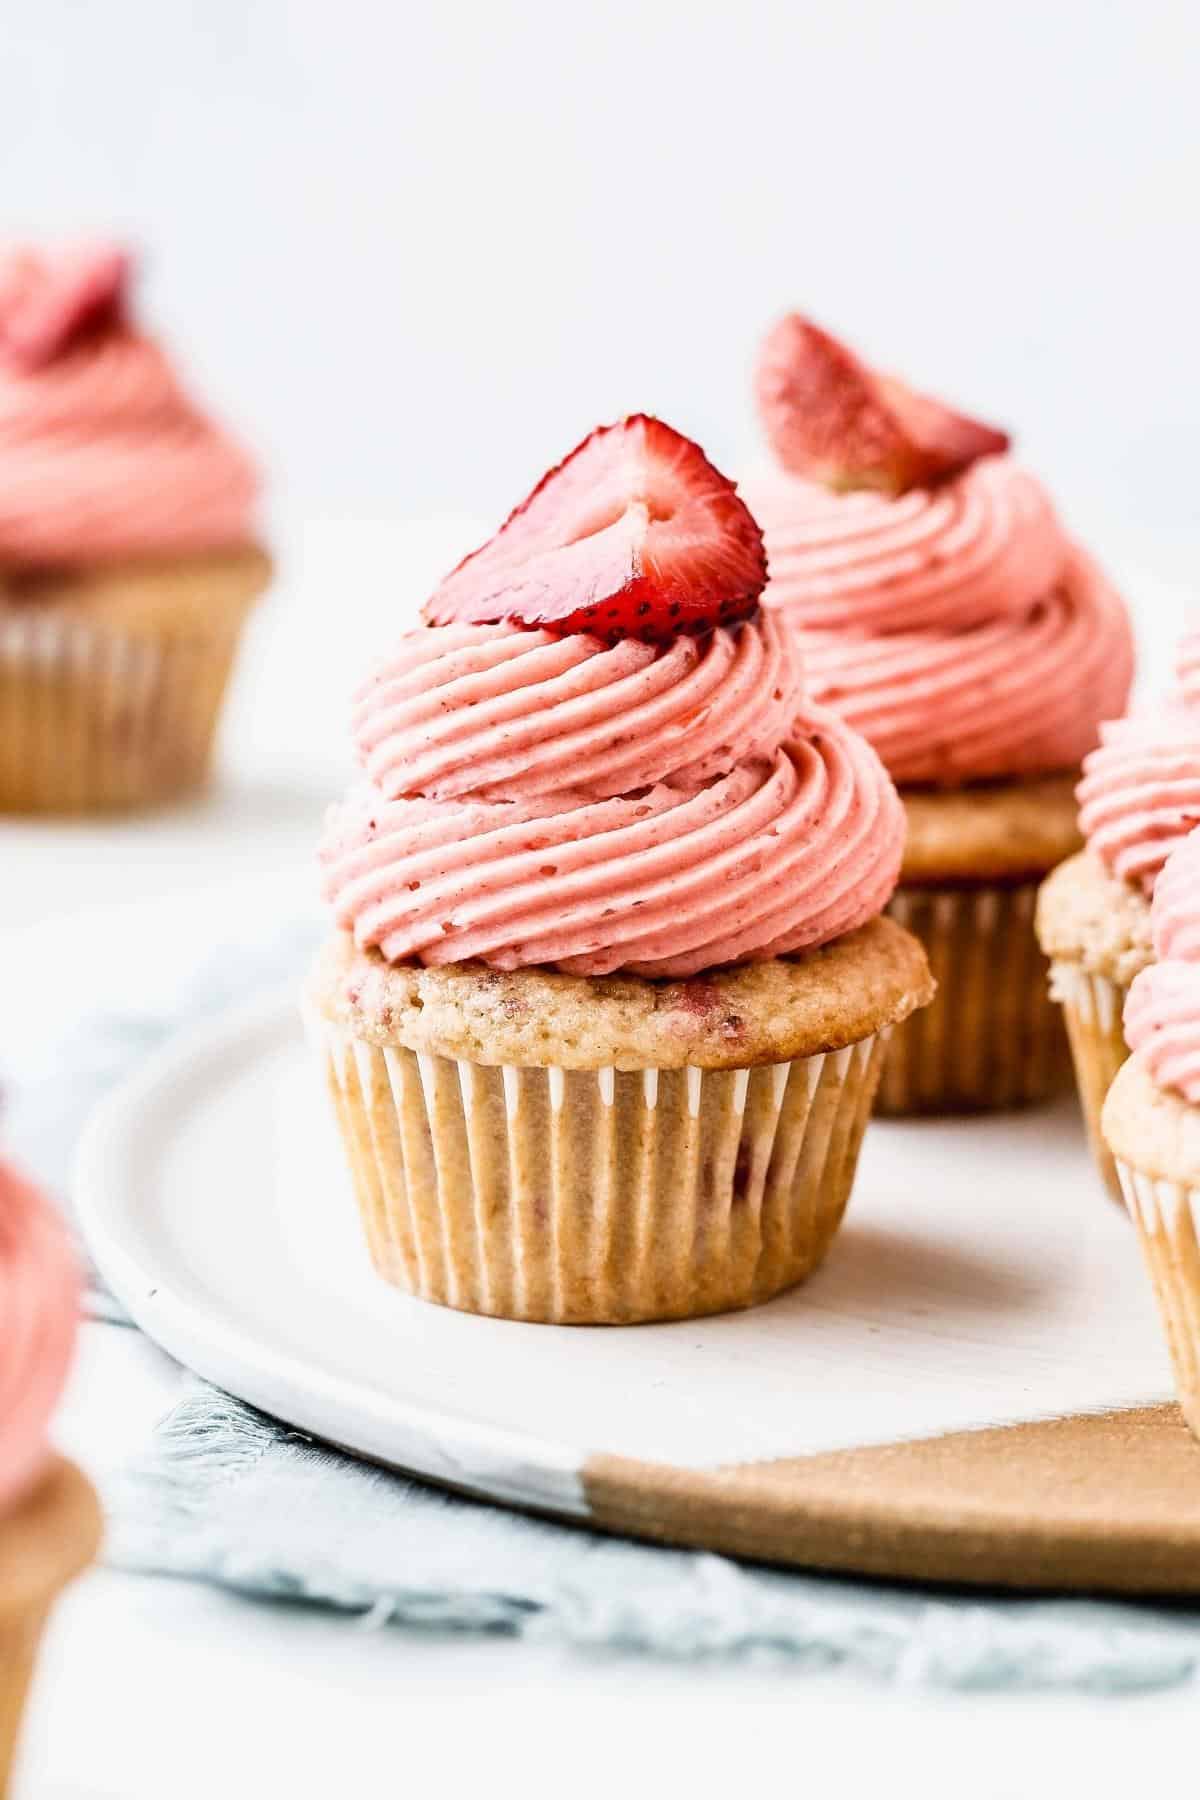 https://butternutbakeryblog.com/wp-content/uploads/2019/04/roasted-strawberry-cupcakes-1.jpg